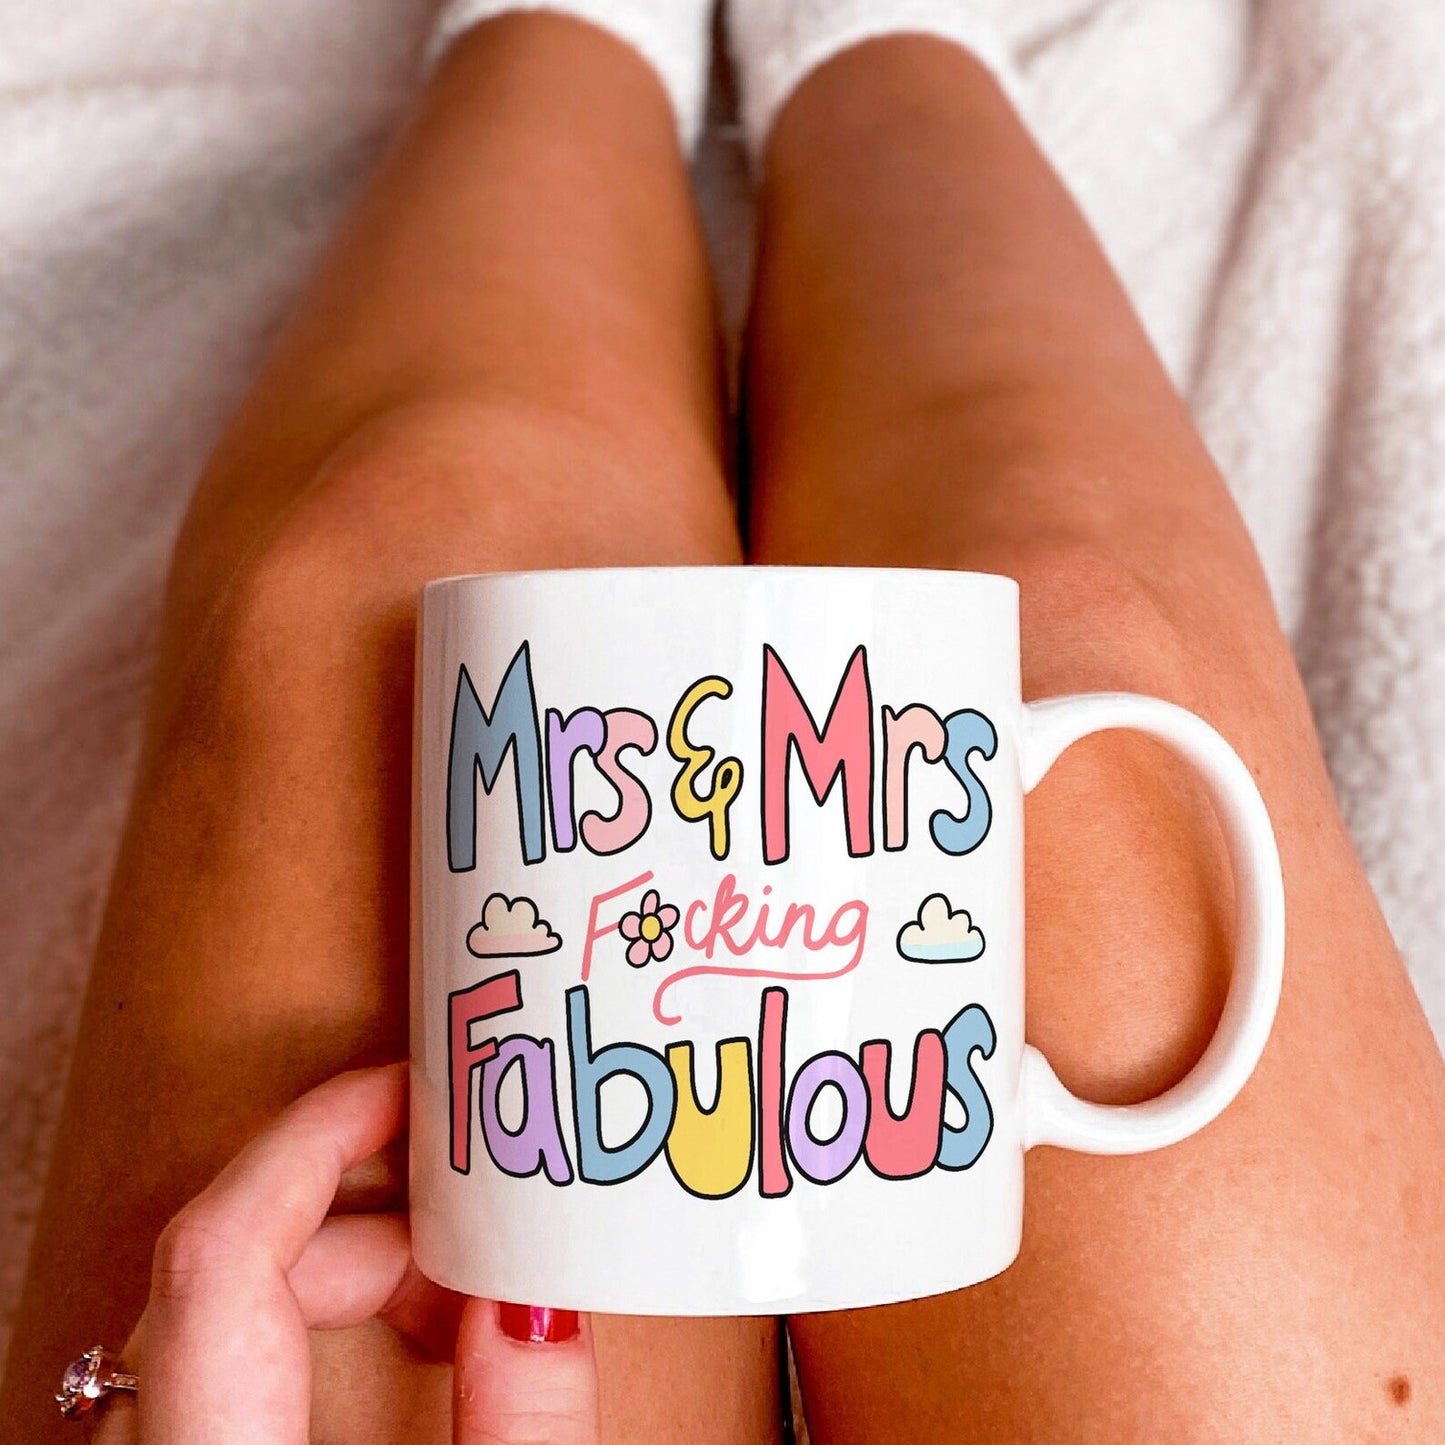 'Mrs & Mrs F*cking Fabulous' Mug